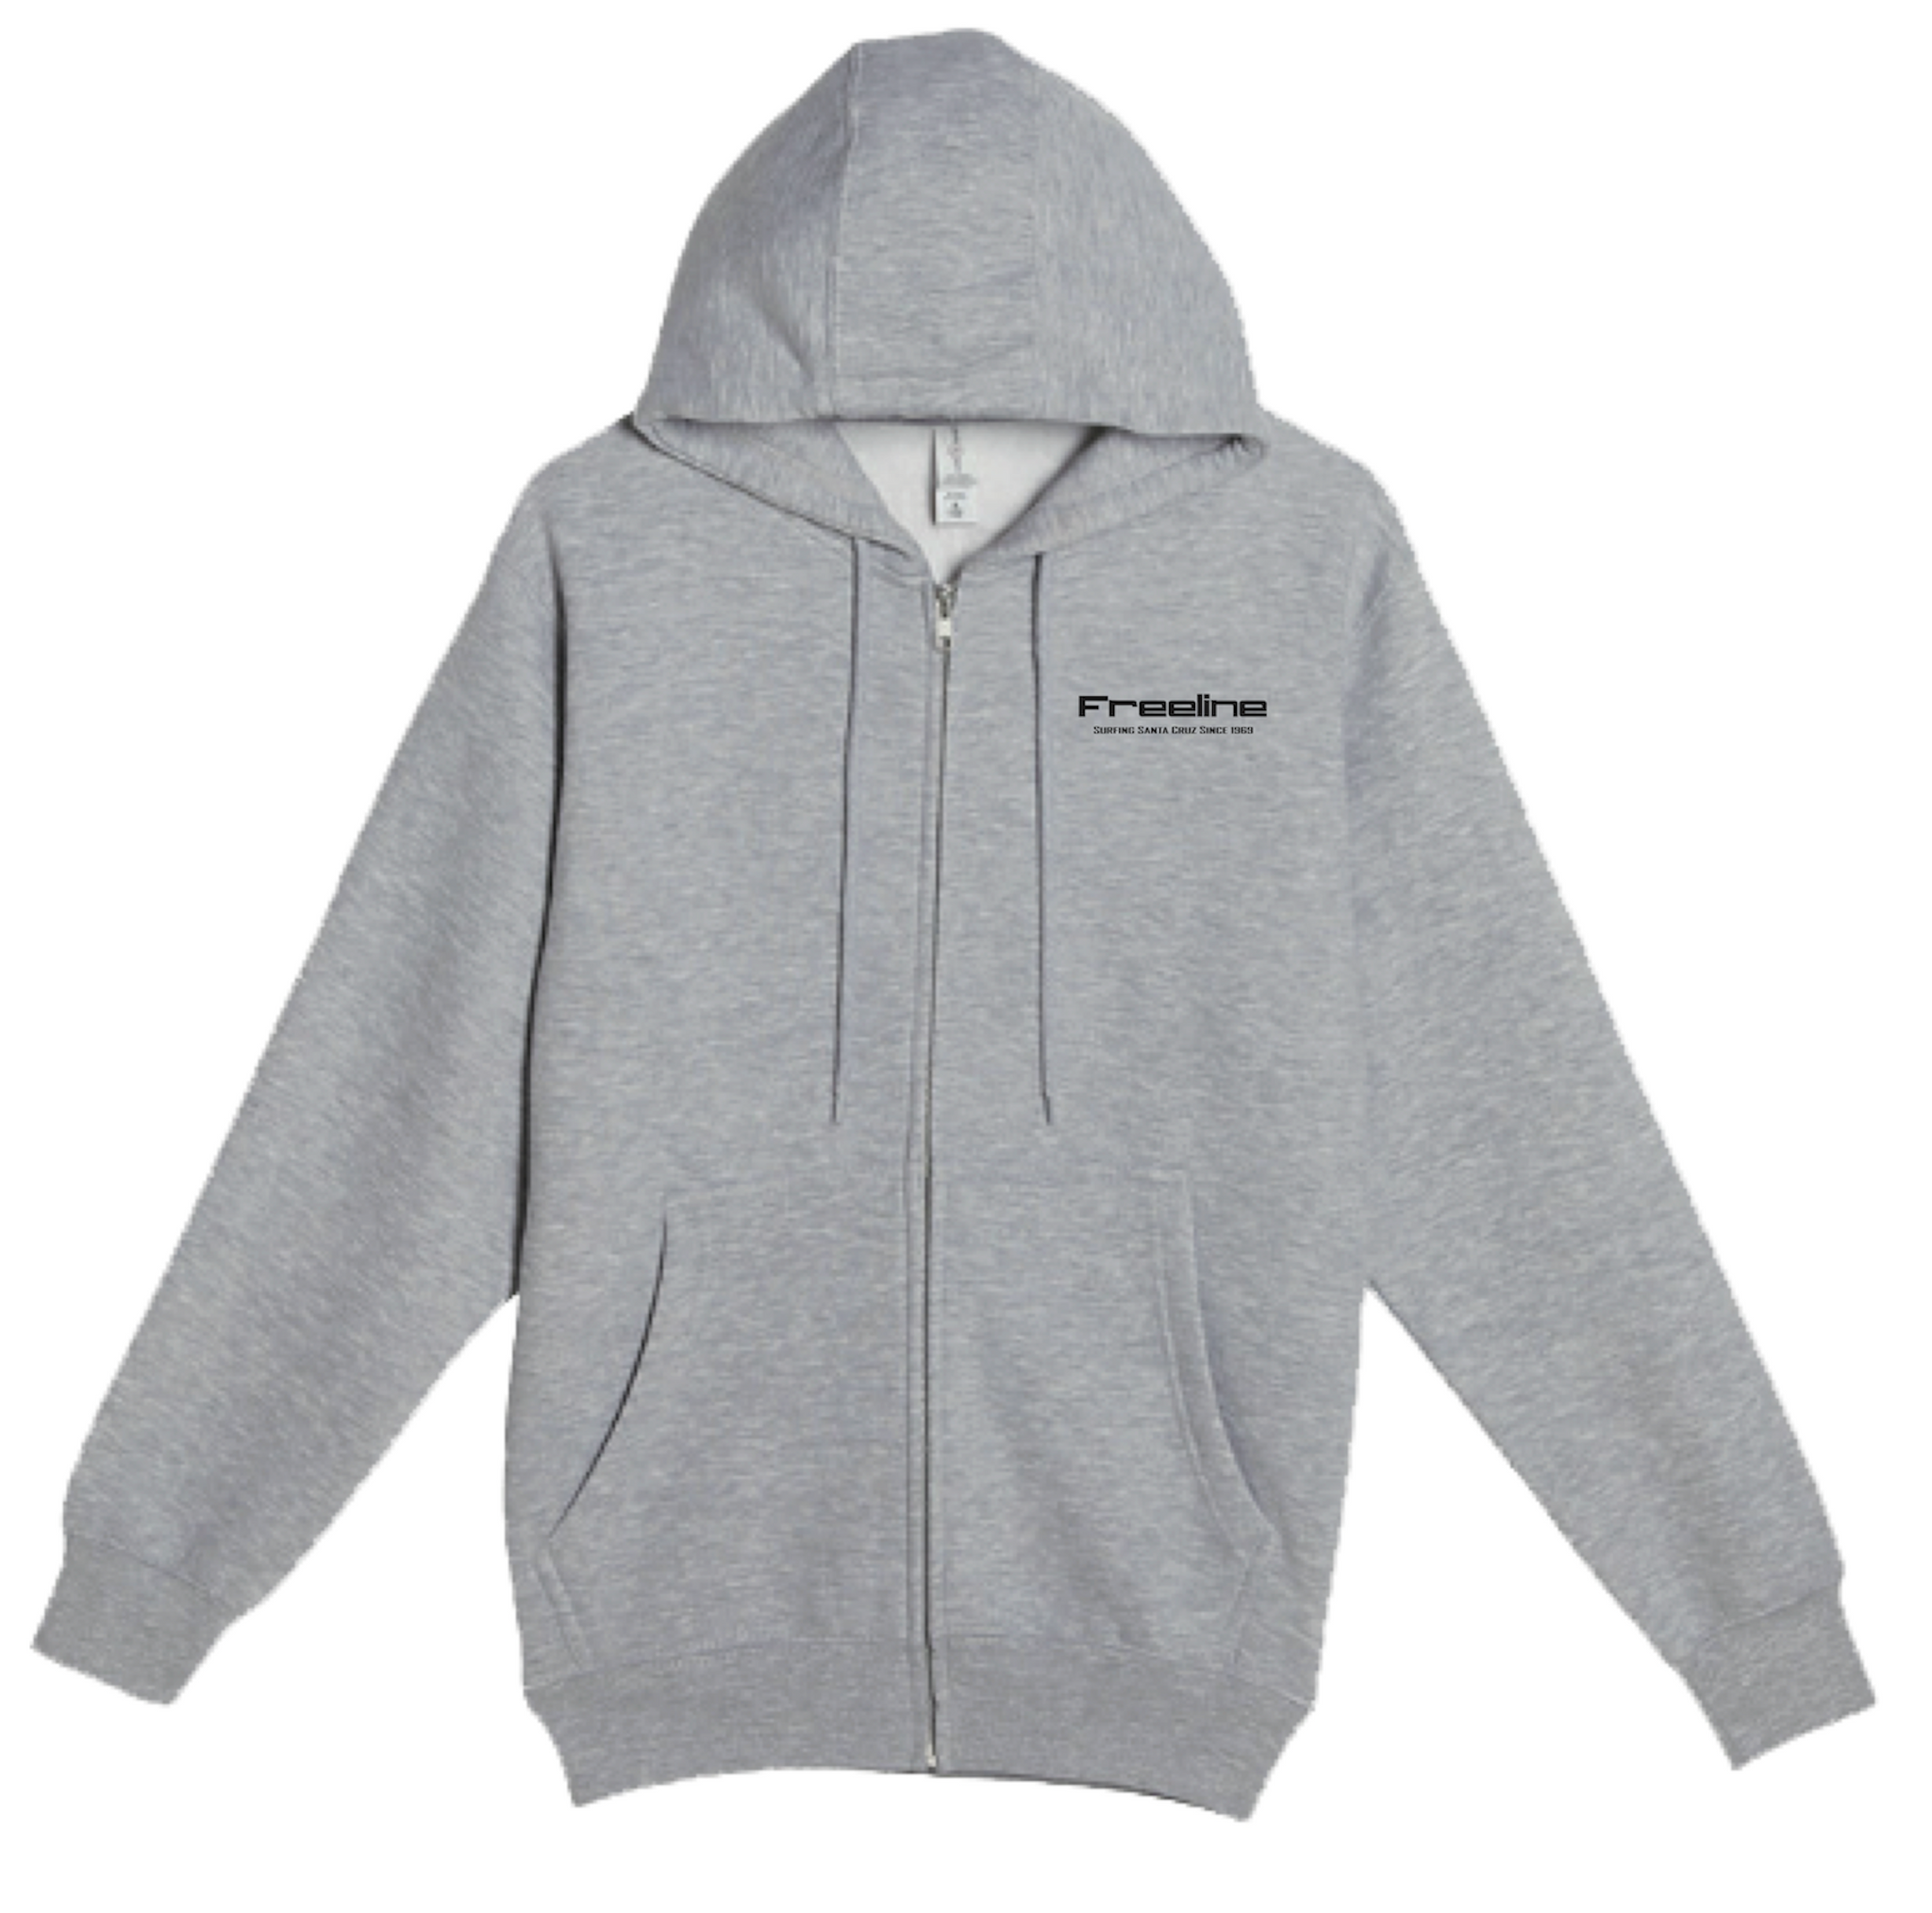 L00555 - Surfer - Adult Full Zip Hooded Sweatshirt